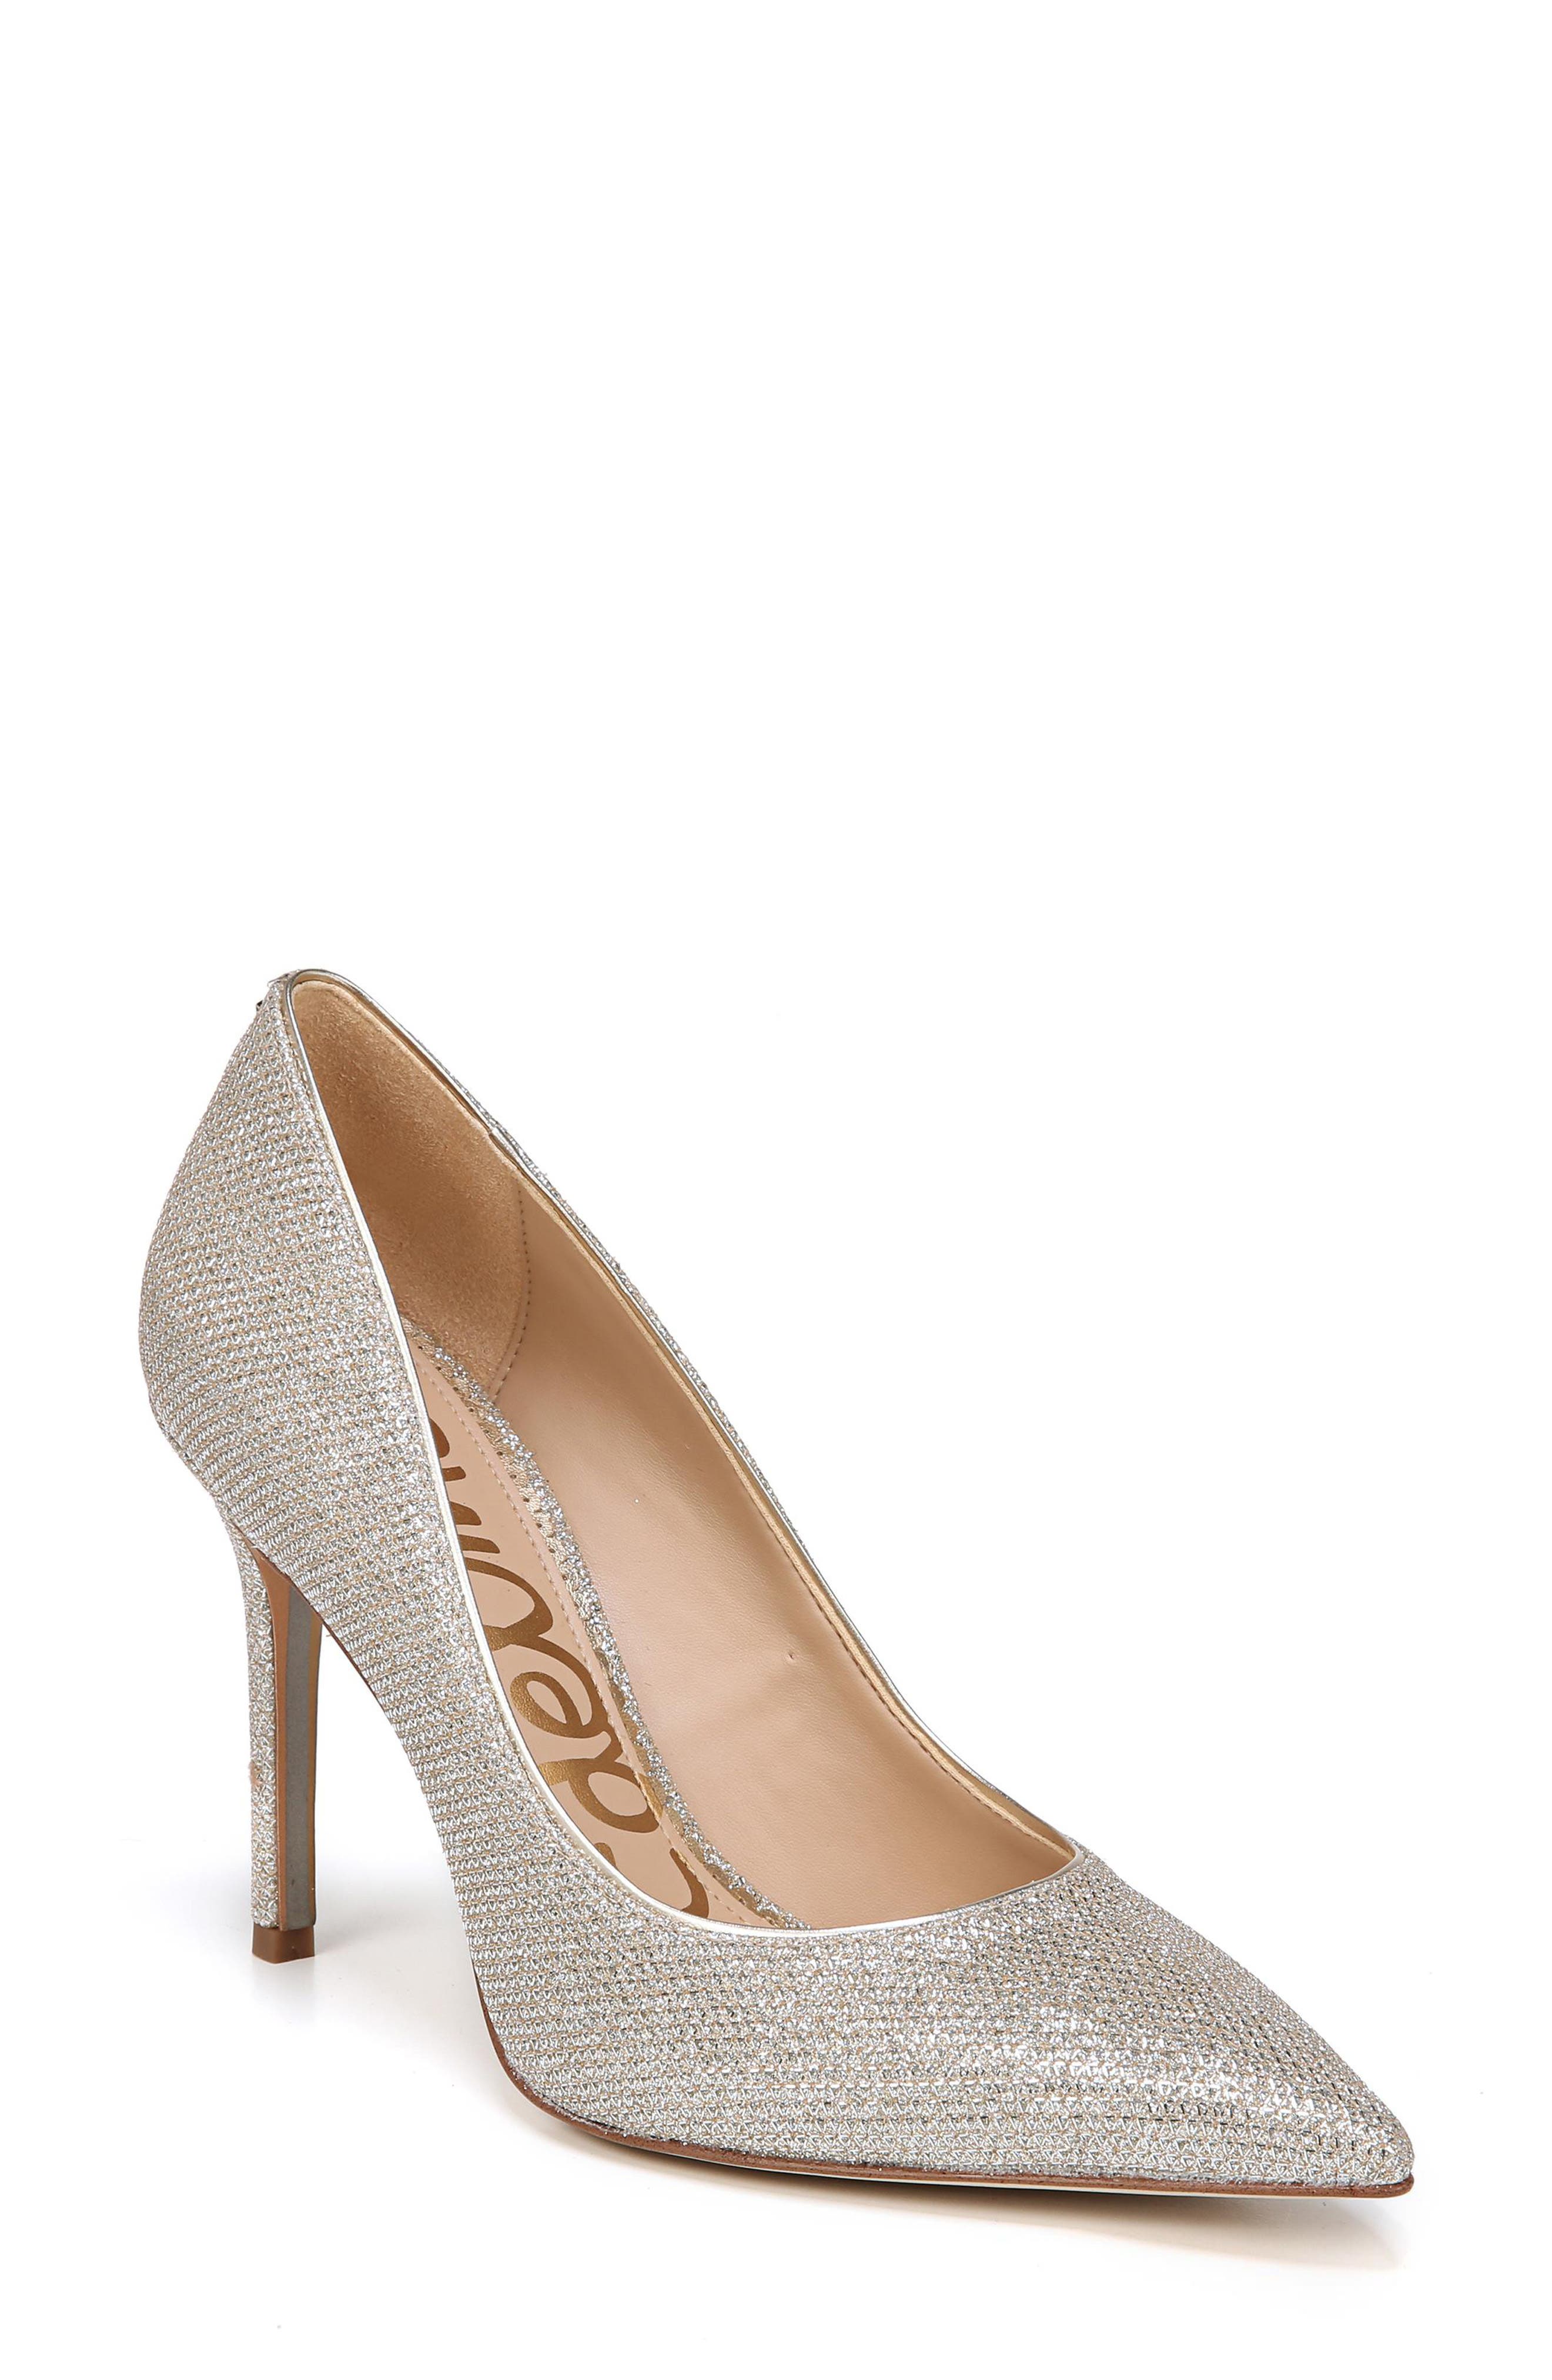 silver heels nordstrom